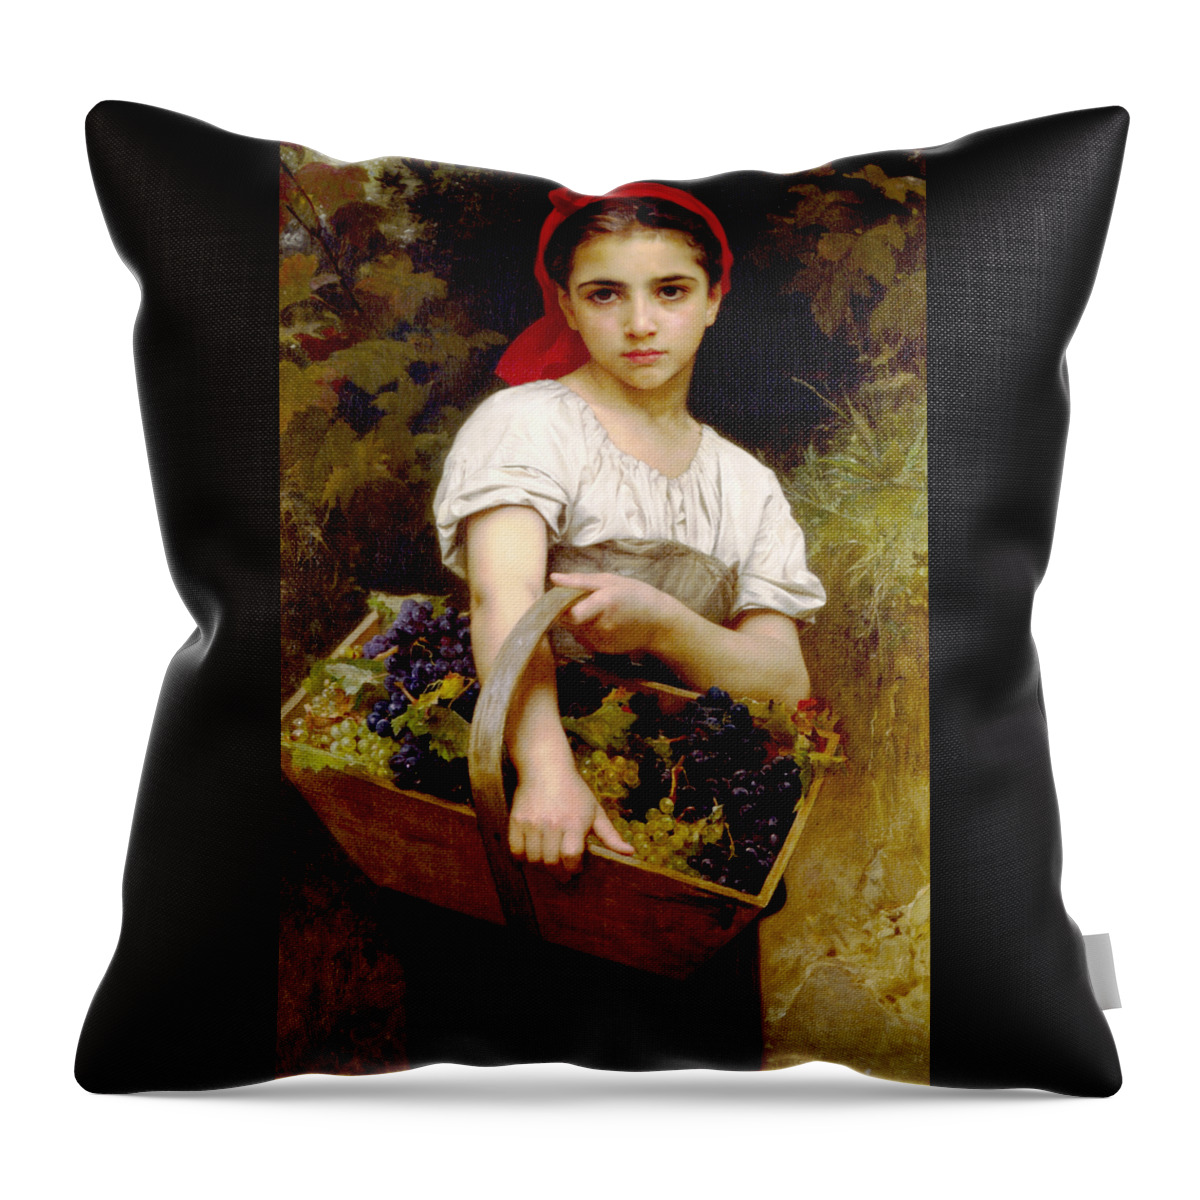 William Bouguereau Throw Pillow featuring the digital art The Grape Picker by William Bouguereau